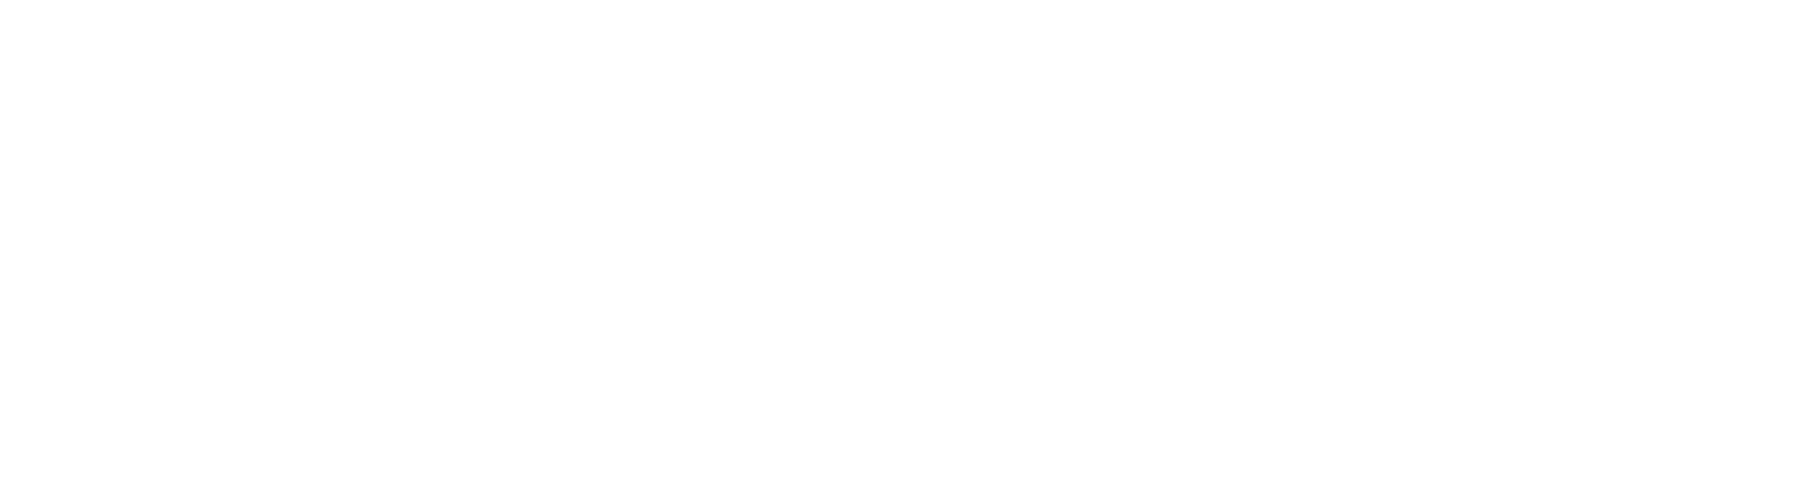 billss logo - w